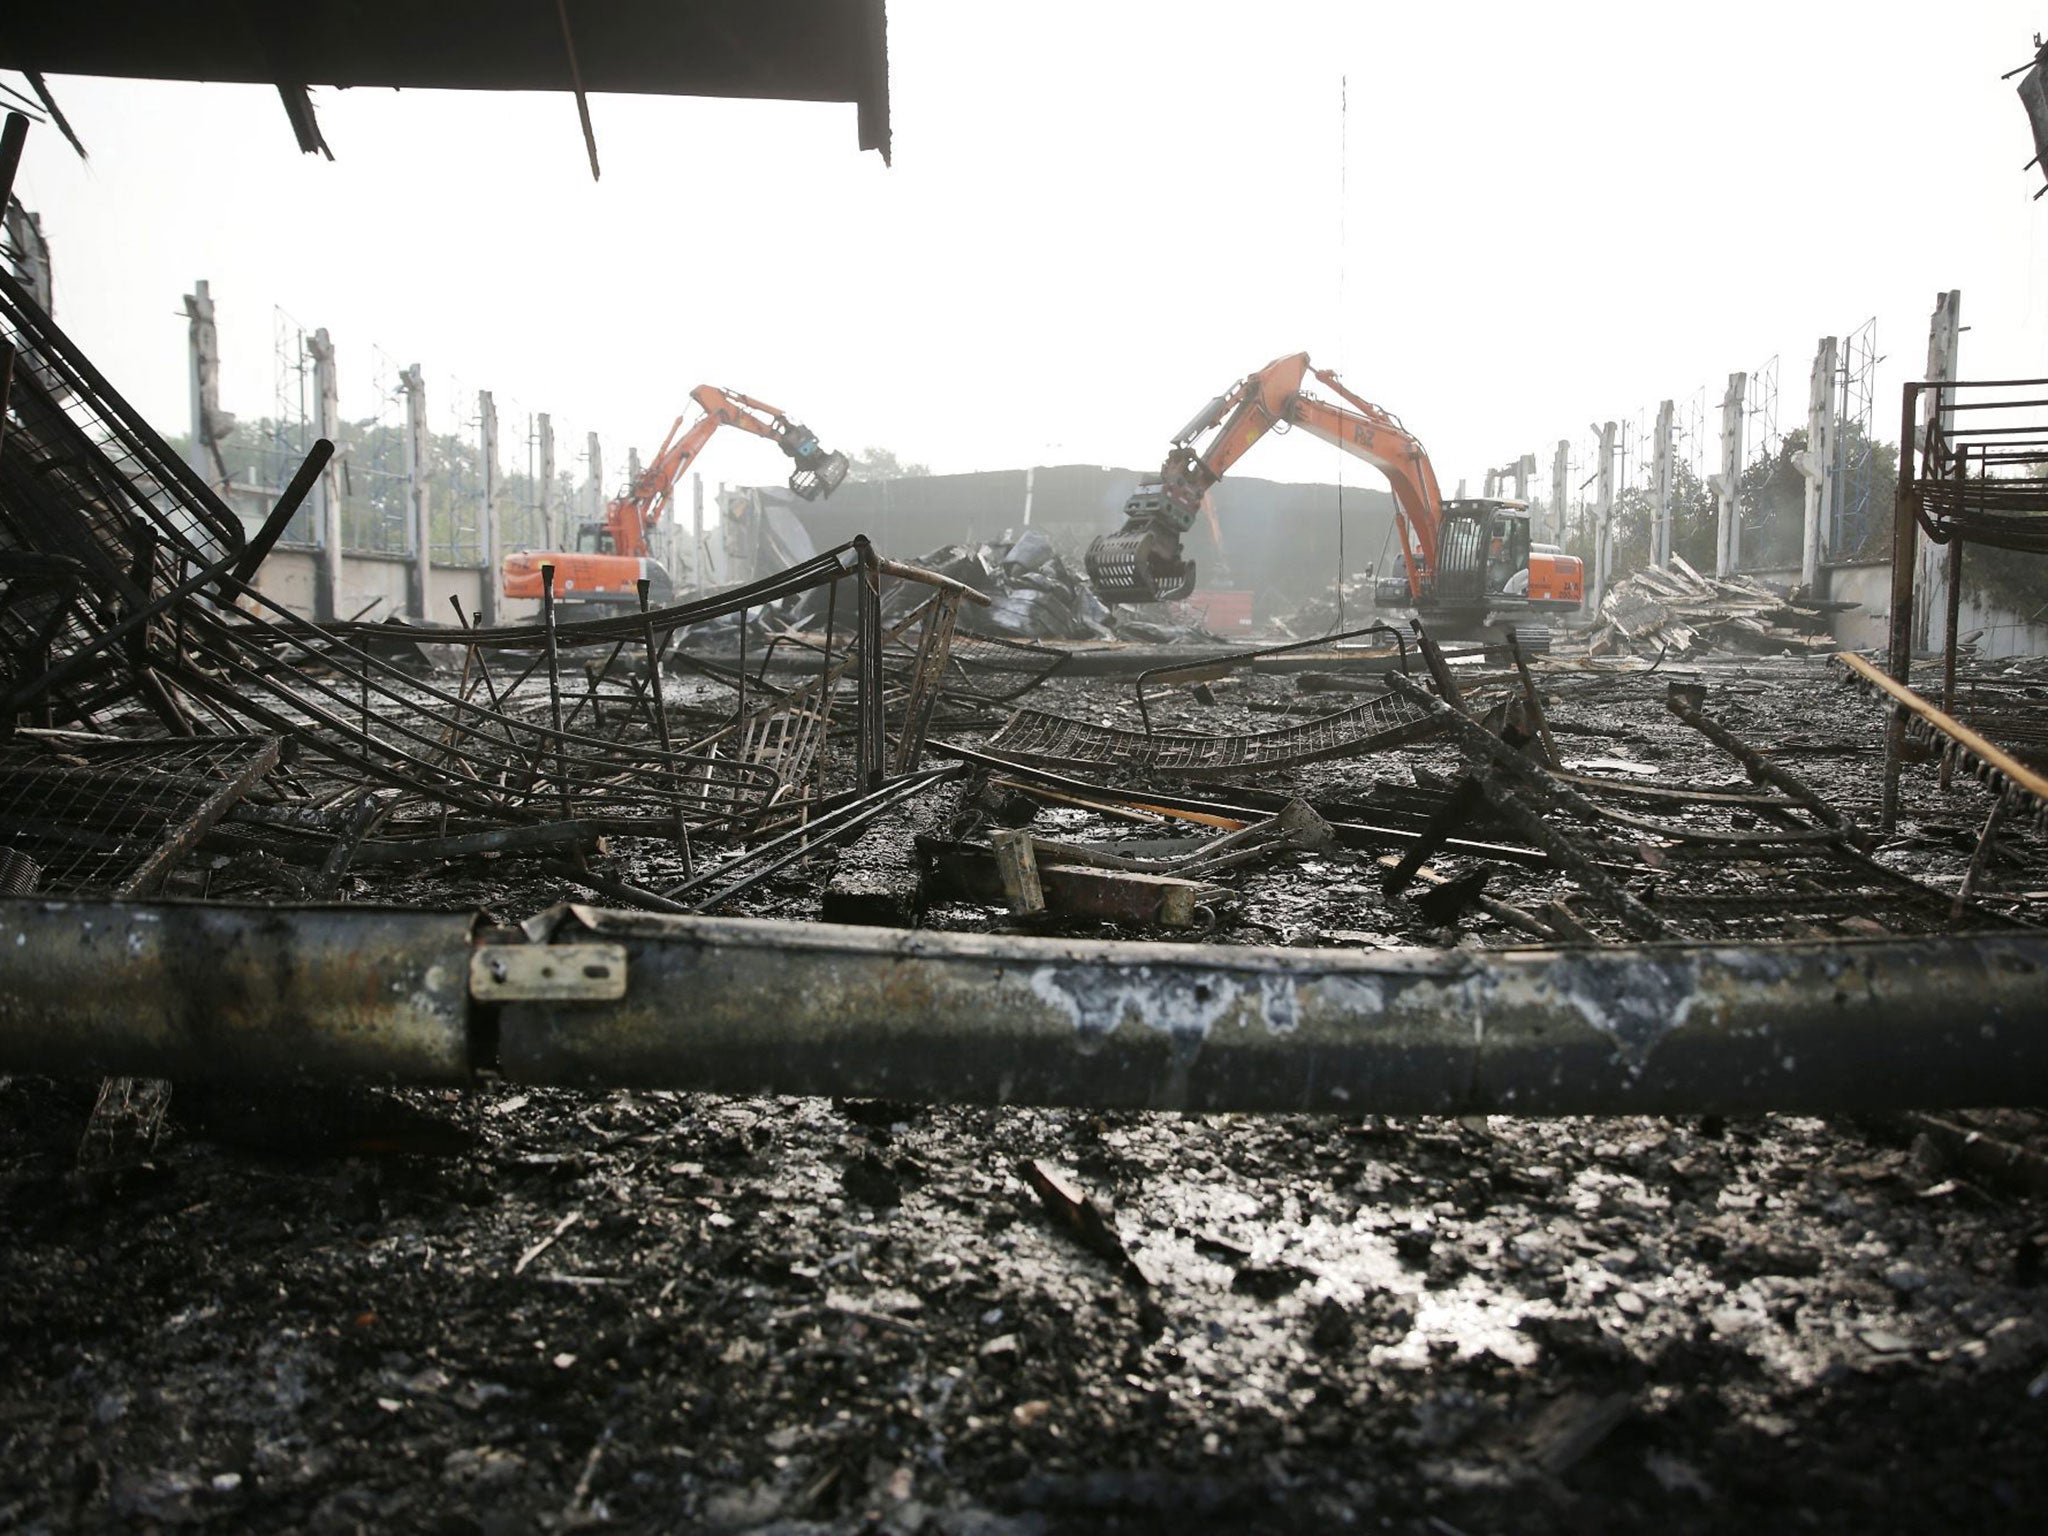 Excavators tear down a burnt down hall at Messe Duesseldorf, Germany, 8 June 2016.